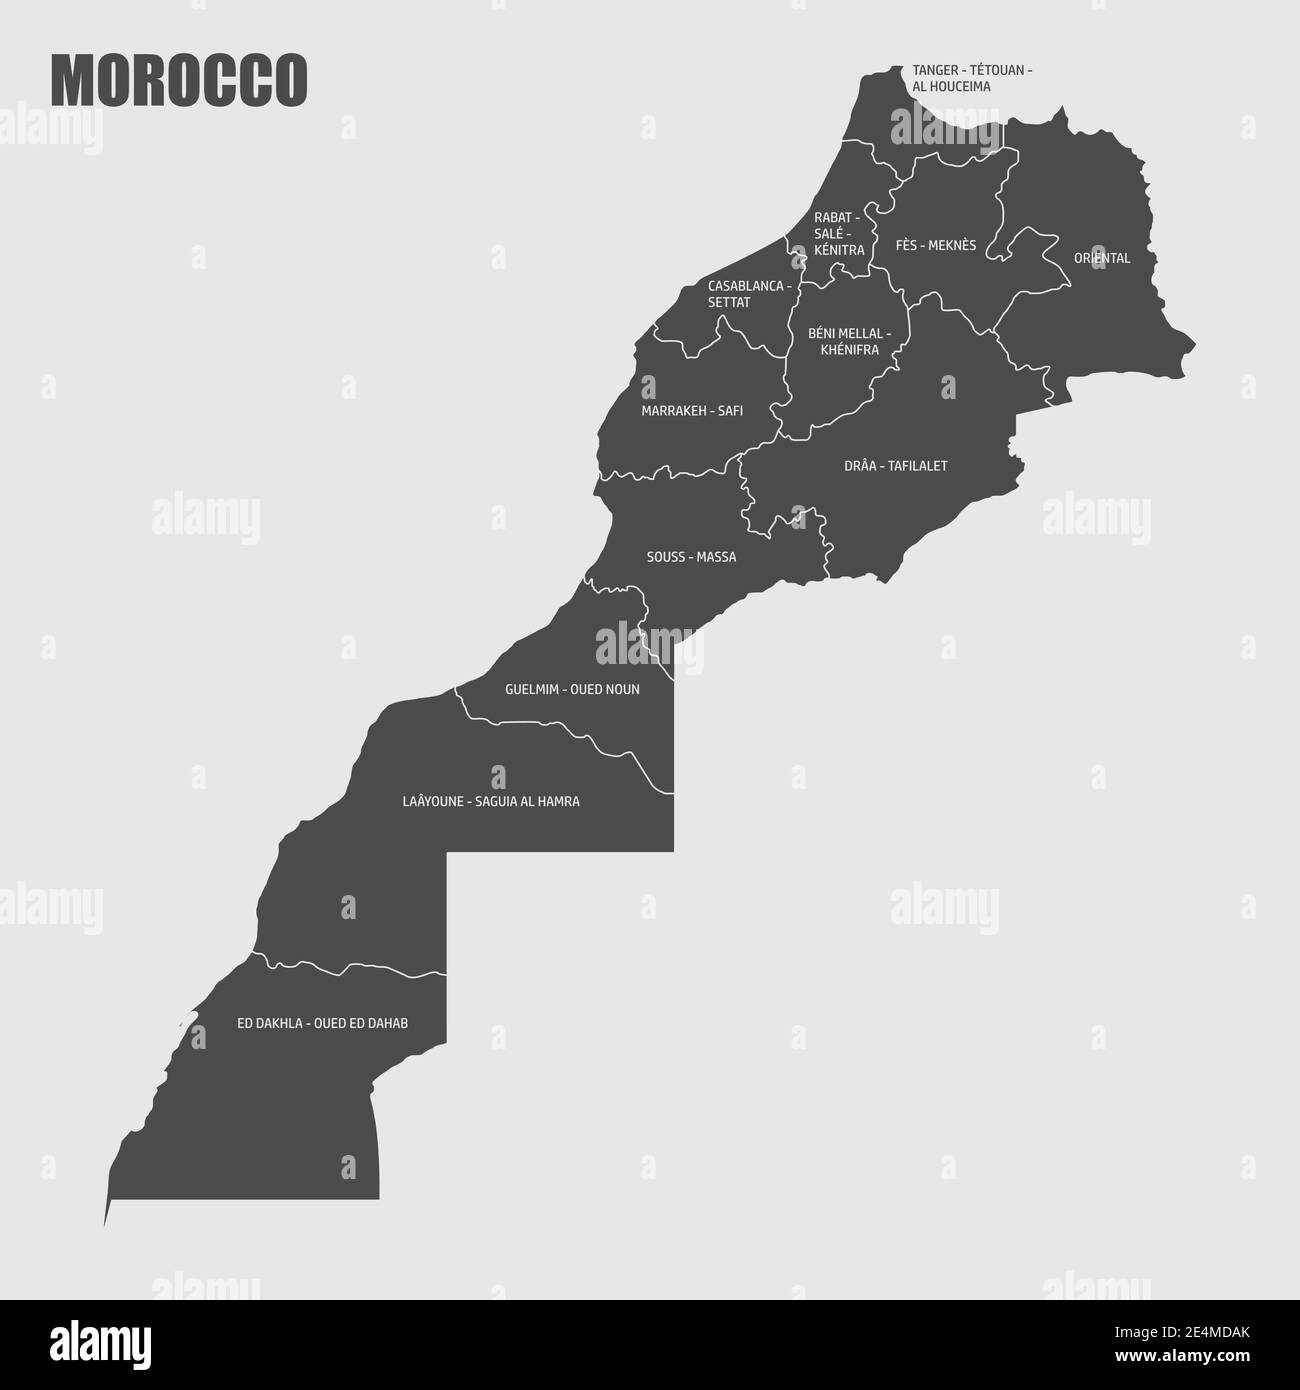 Morocco regions map Stock Vector